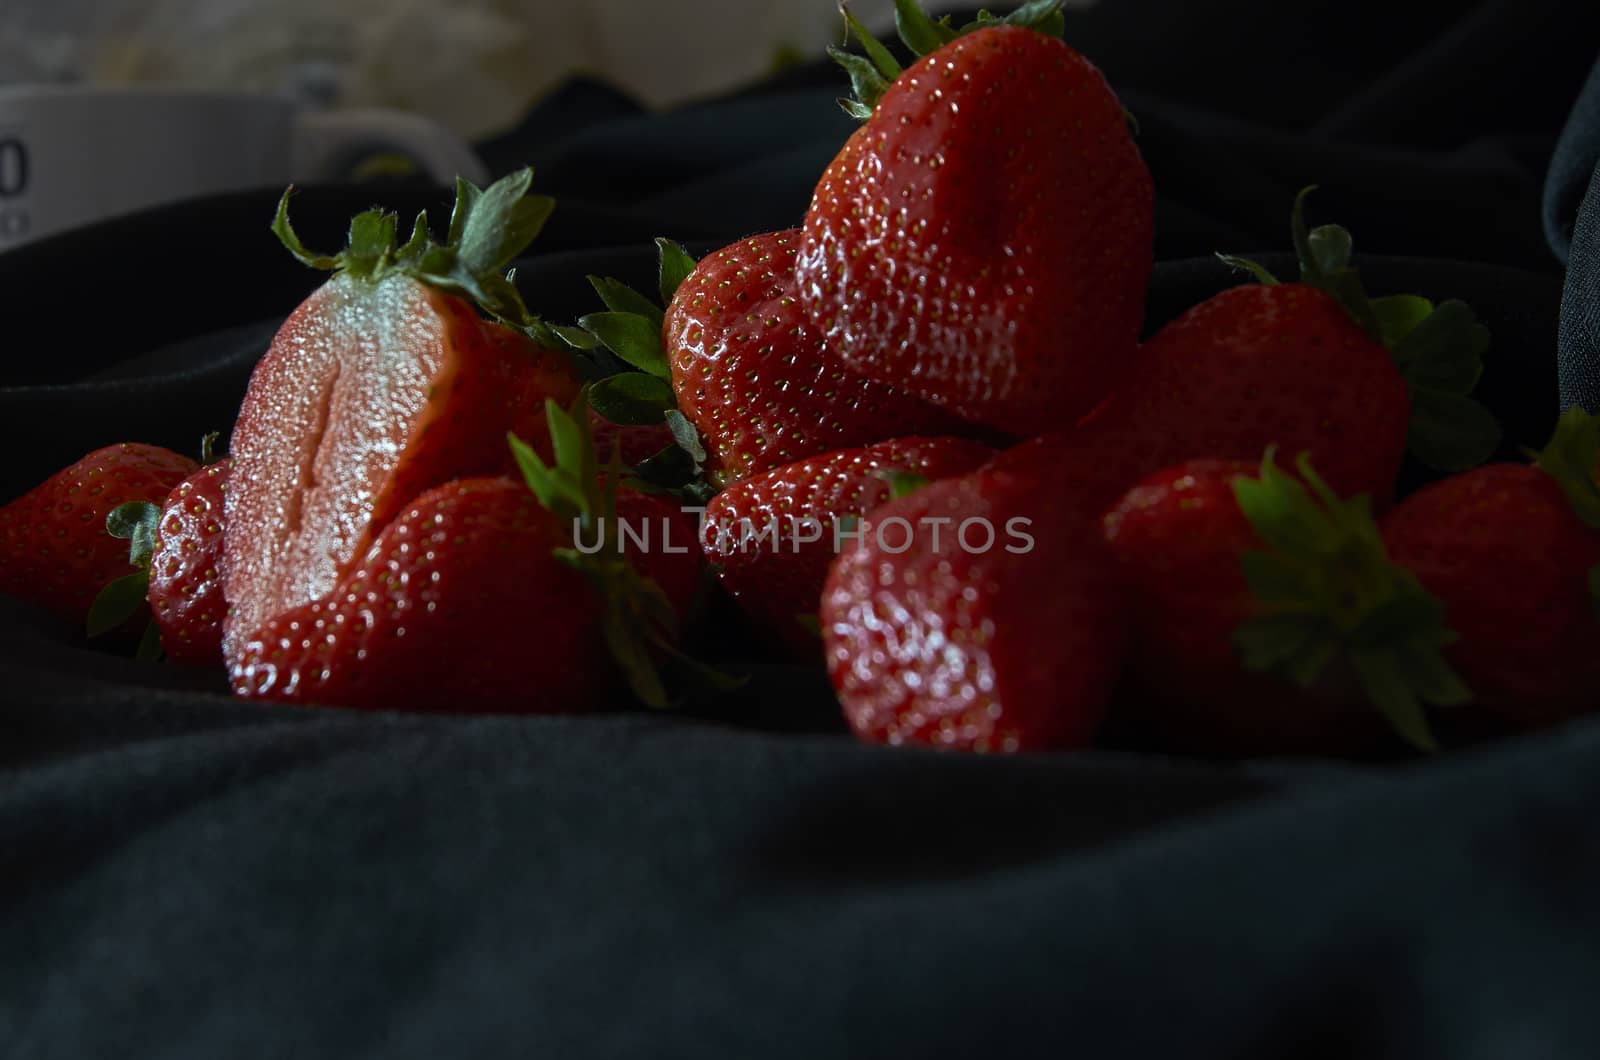 Strawberries on black background, long exposure natural light